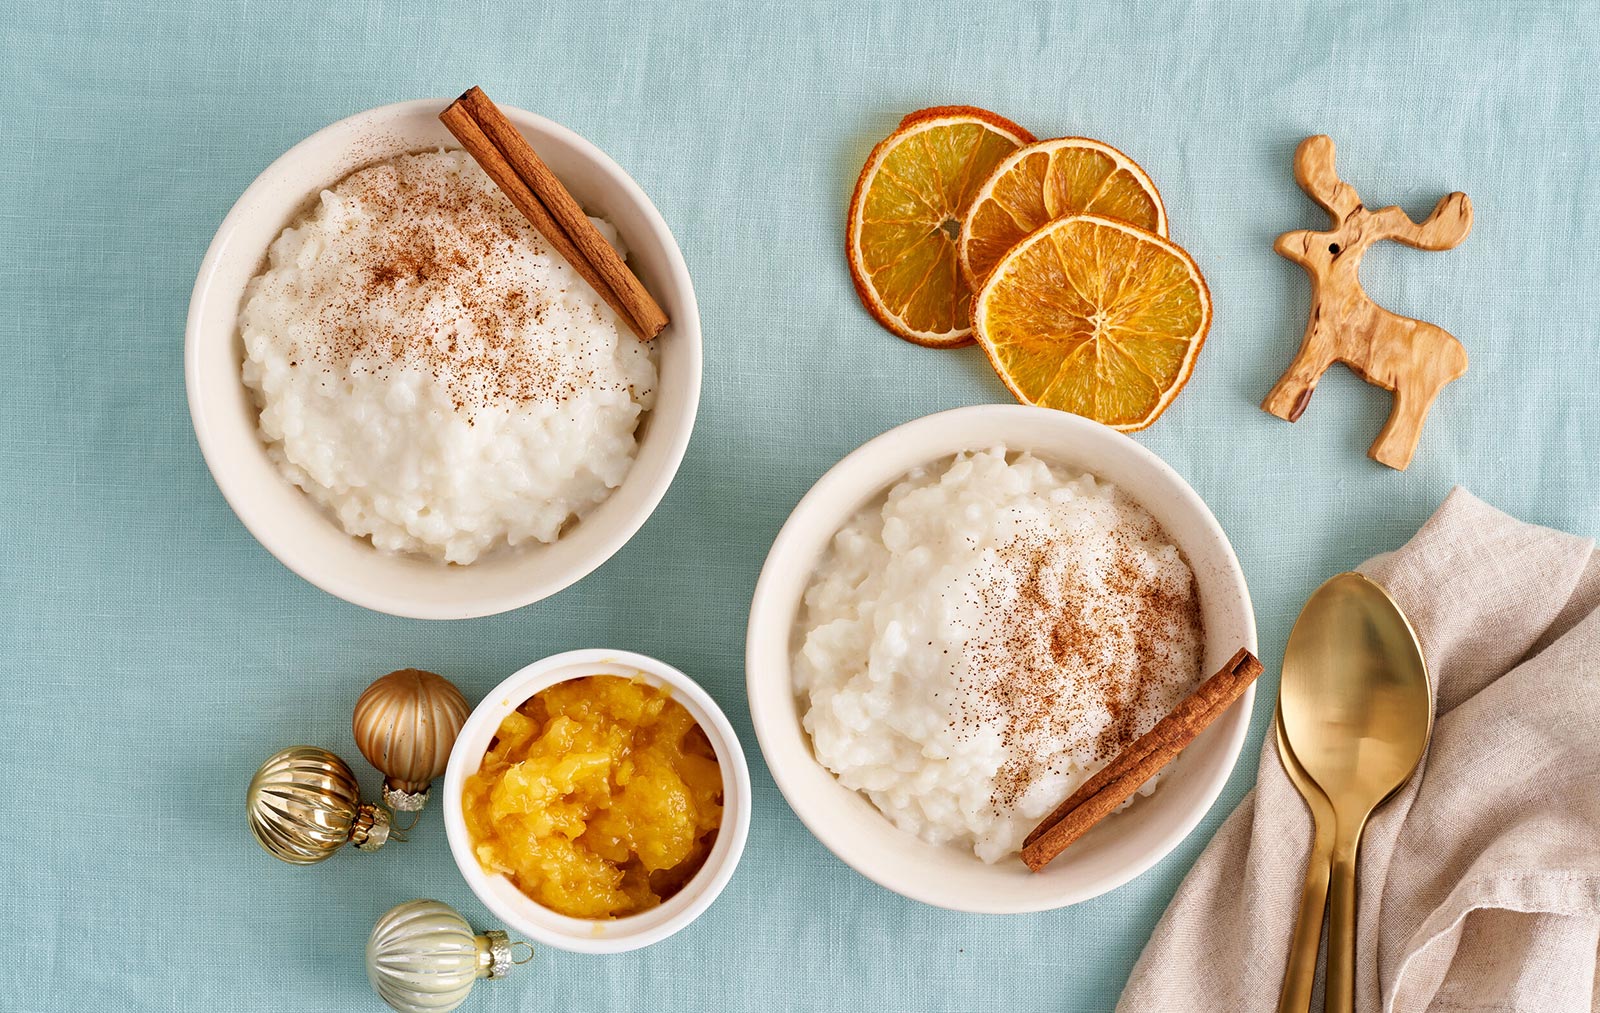 Norwegian comforting Christmas dish risengrynsgrøt: a creamy rice porridge sprinkled with cinnamon, sugar and vanilla